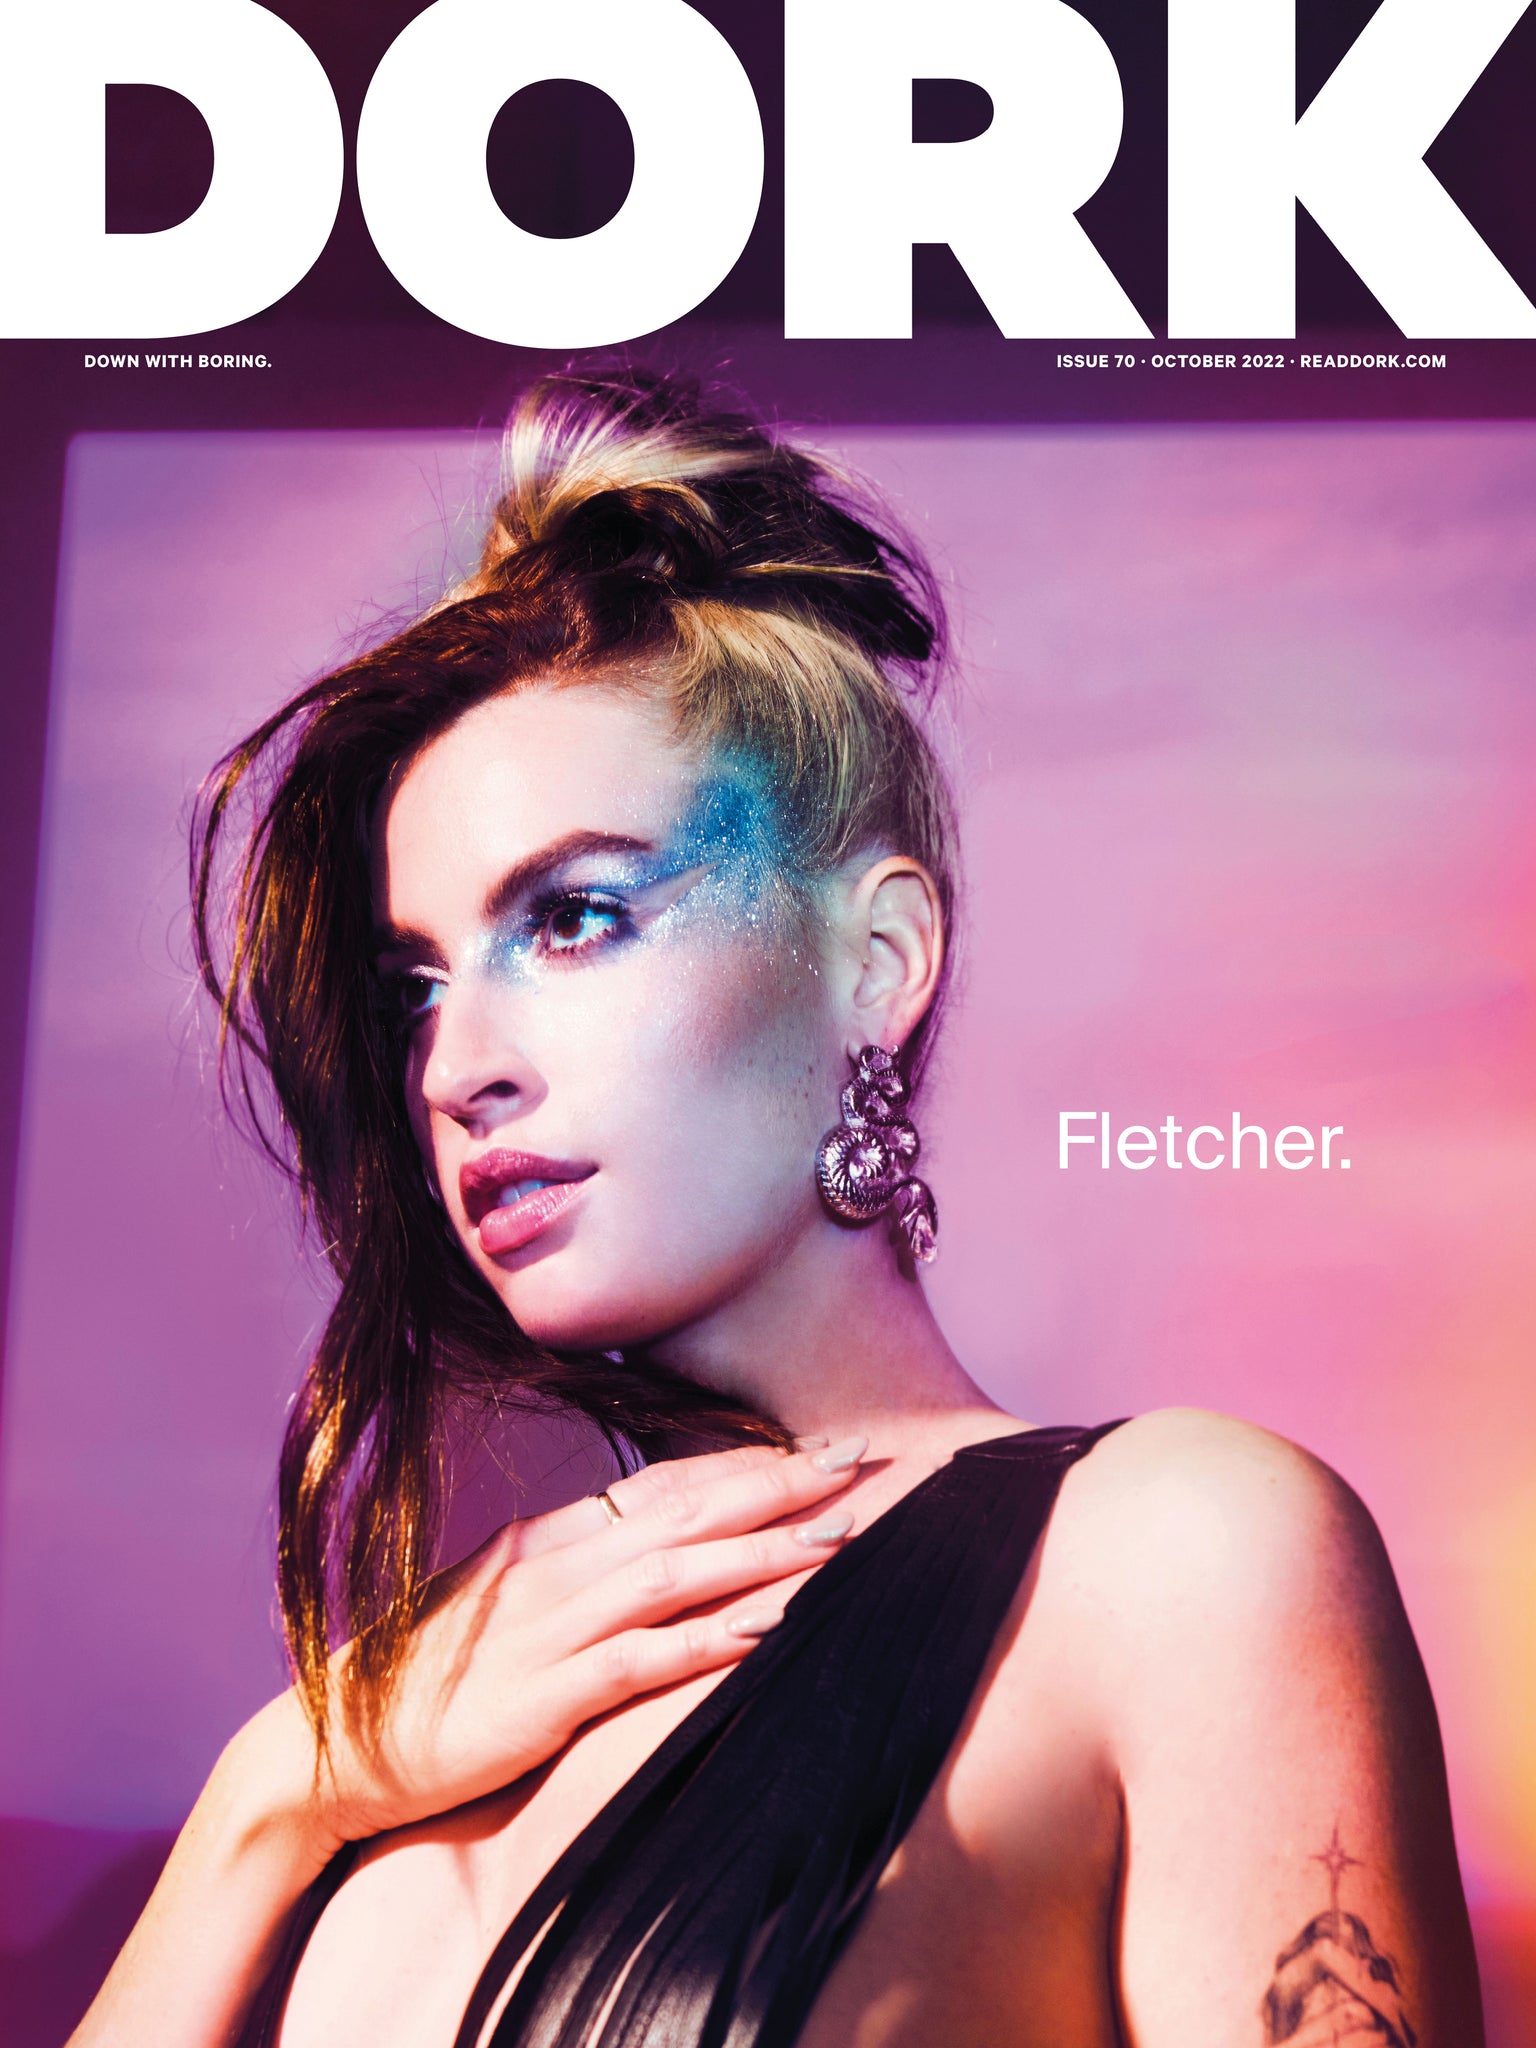 Check out 444rubyy_'s Shuffles louis tomlinson: dork magazine